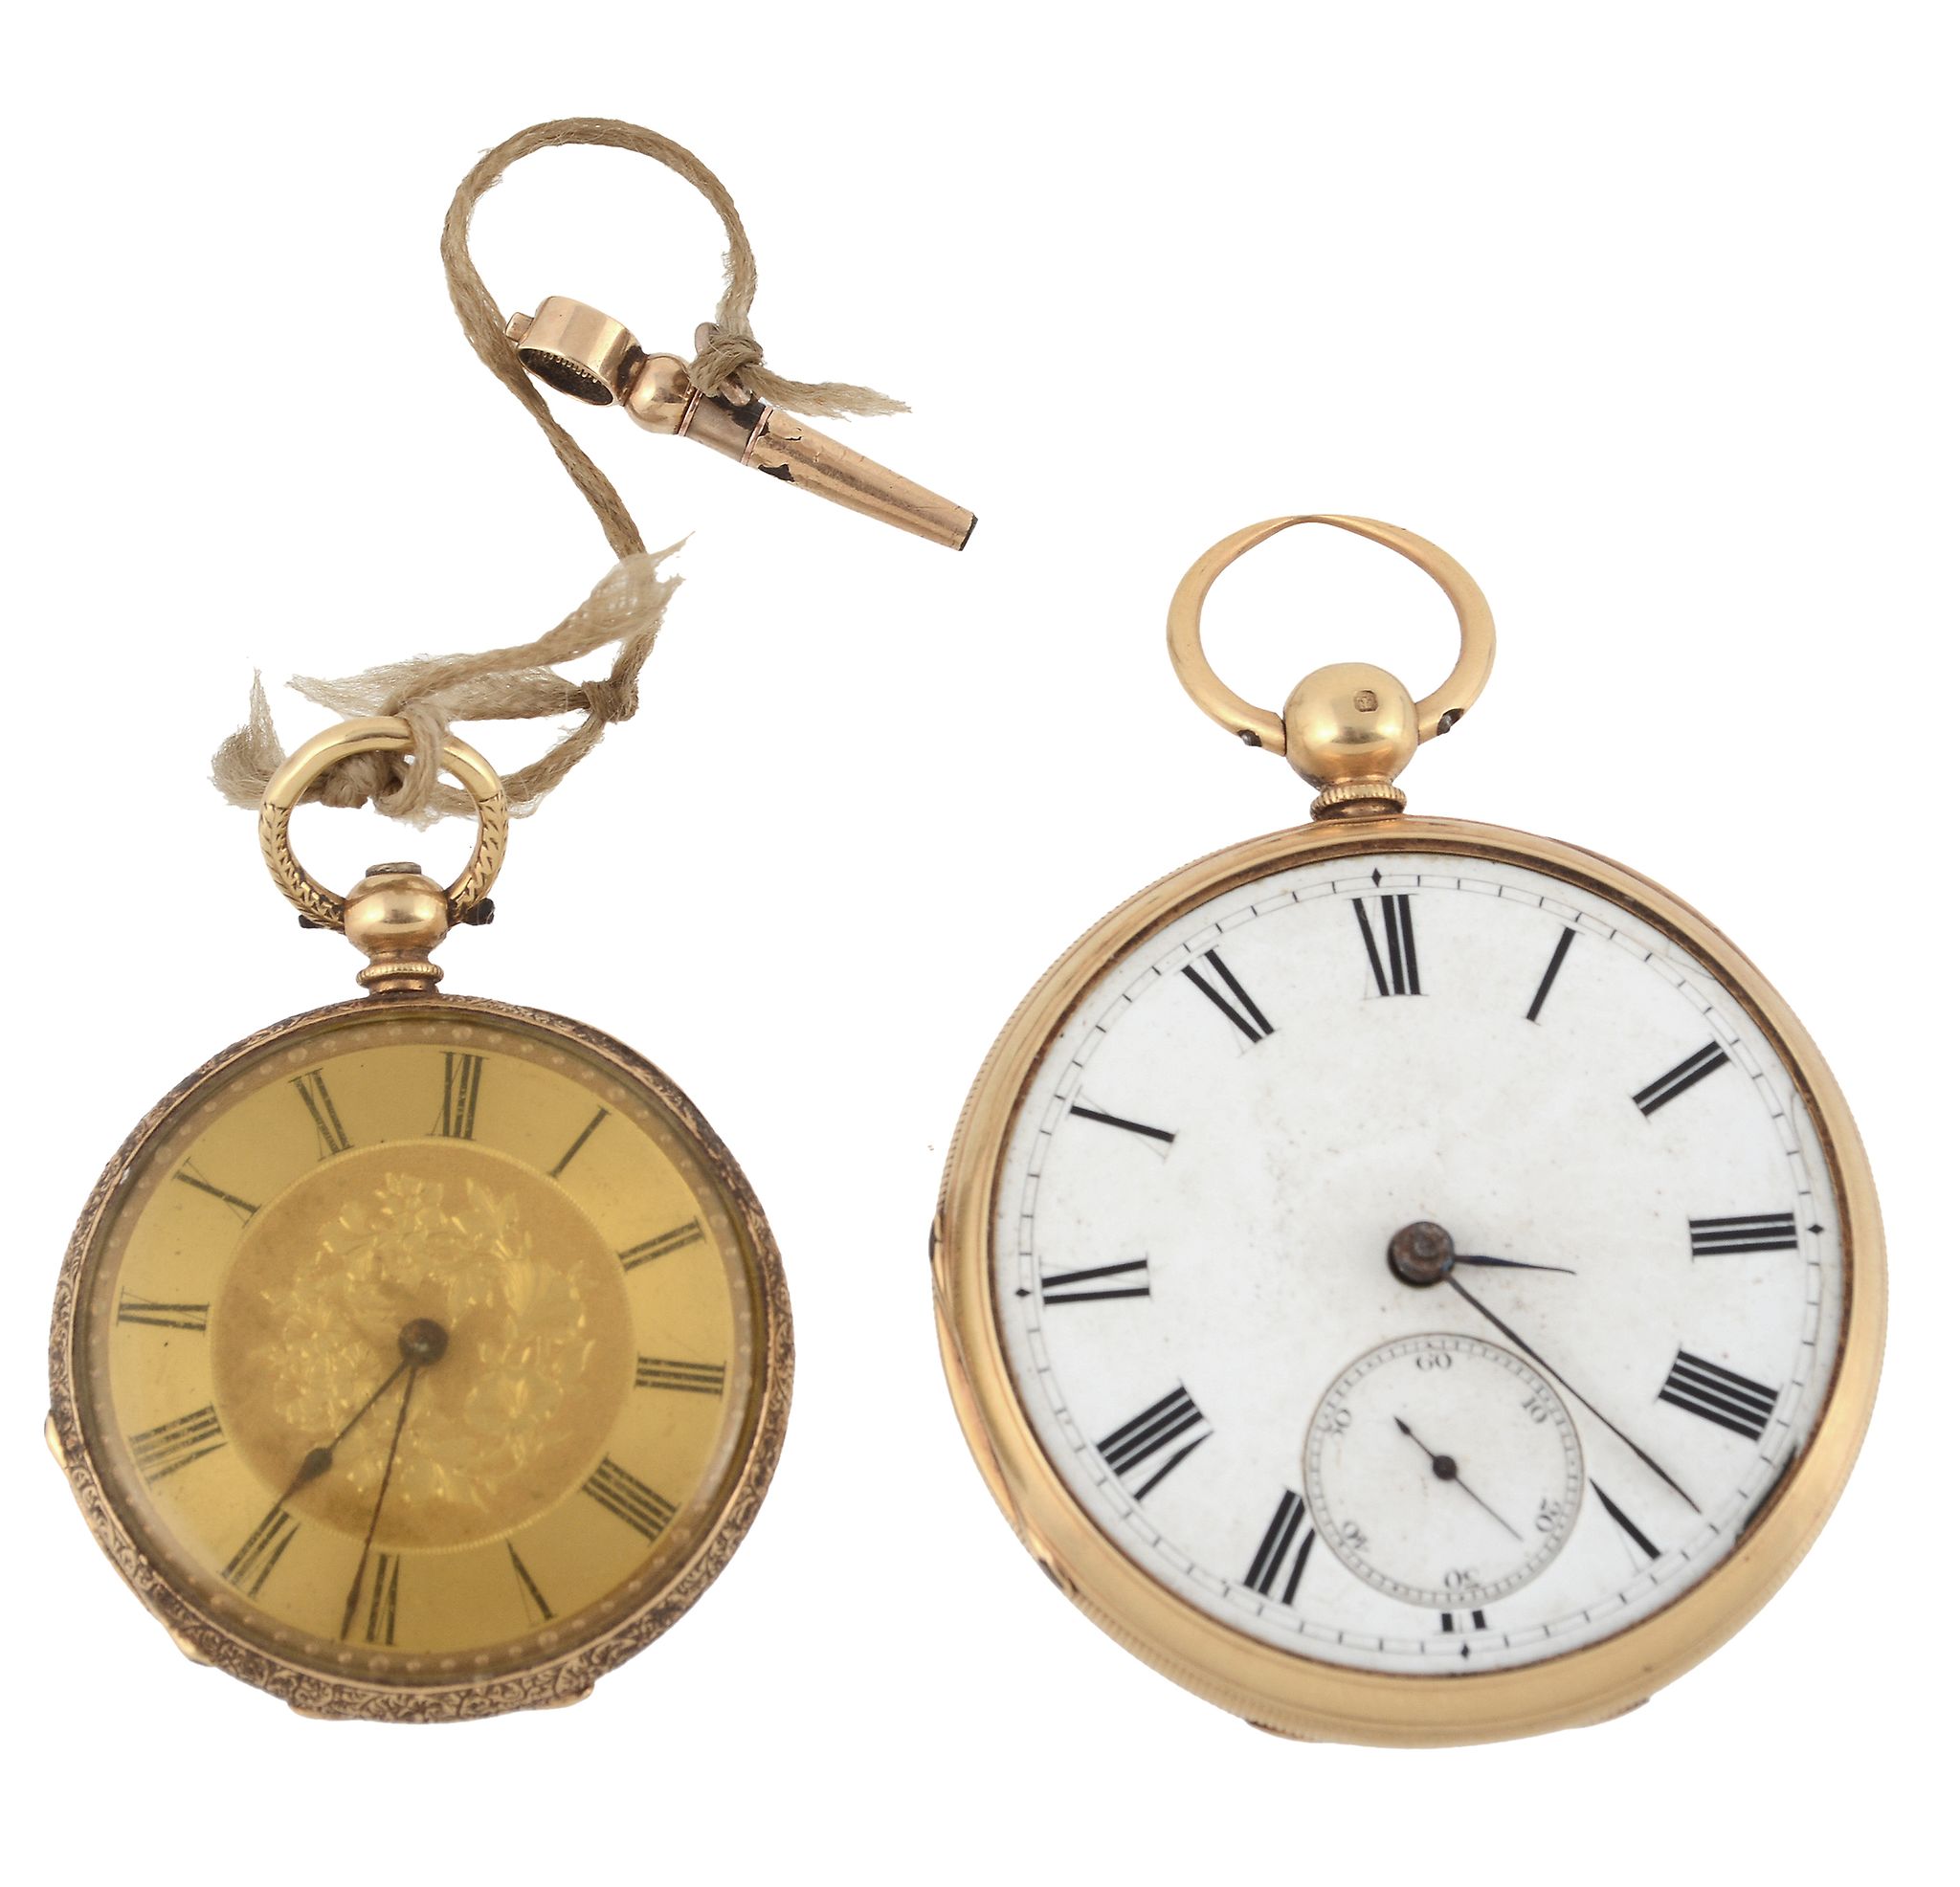 Henry Graham, an 18 carat gold open face pocket watch, hallmarked London 1859, an English lever